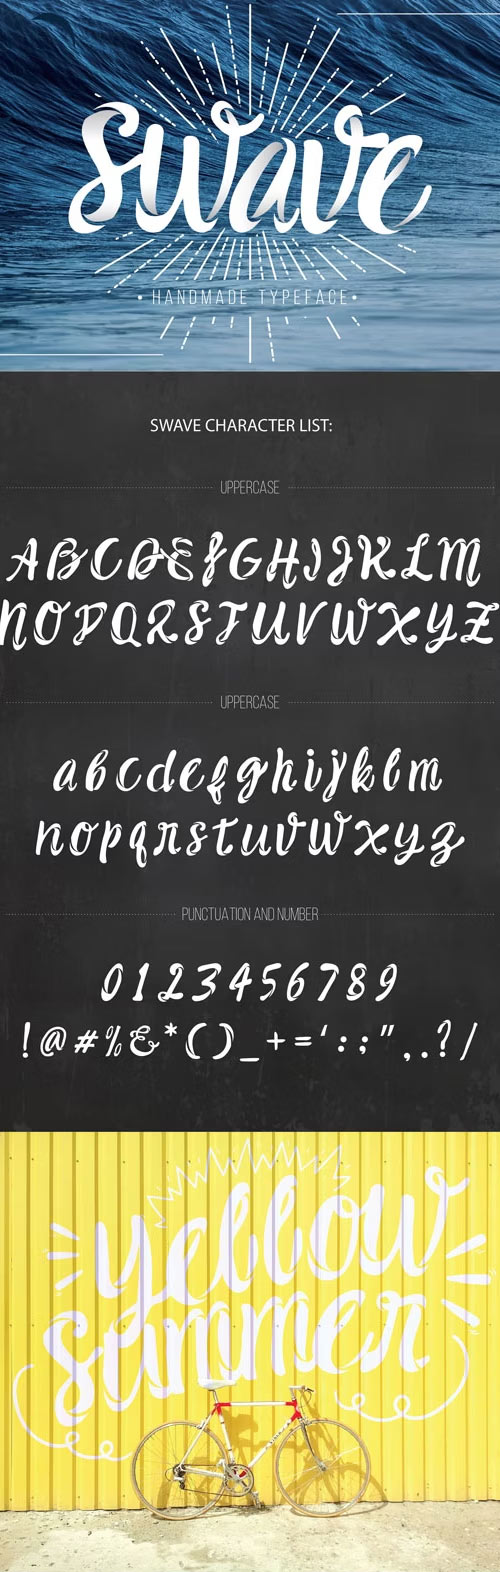 Swave Typeface 19256849